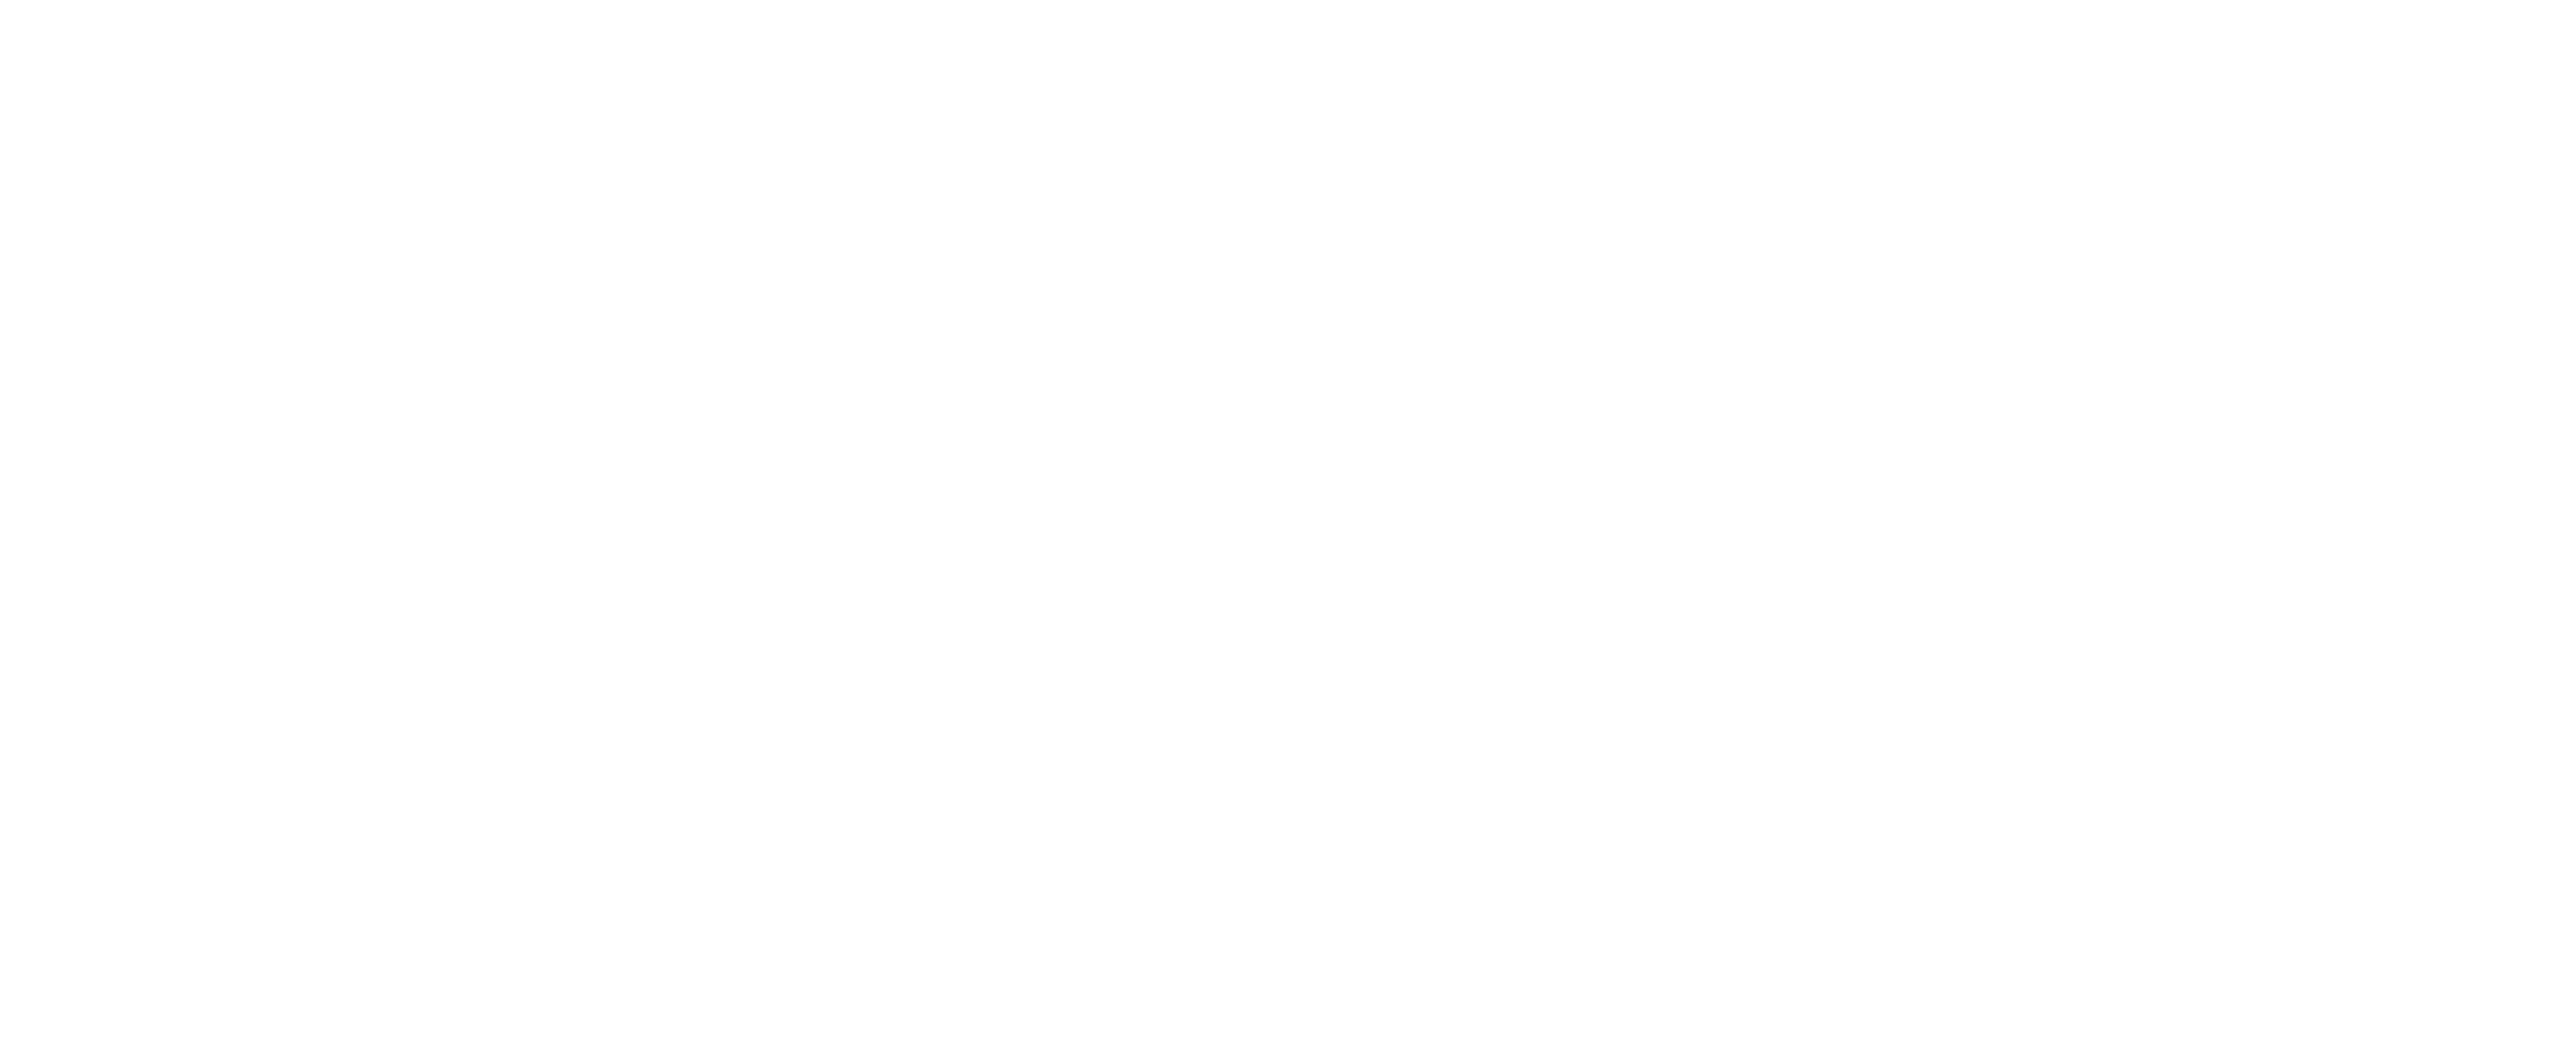 MetaU-06